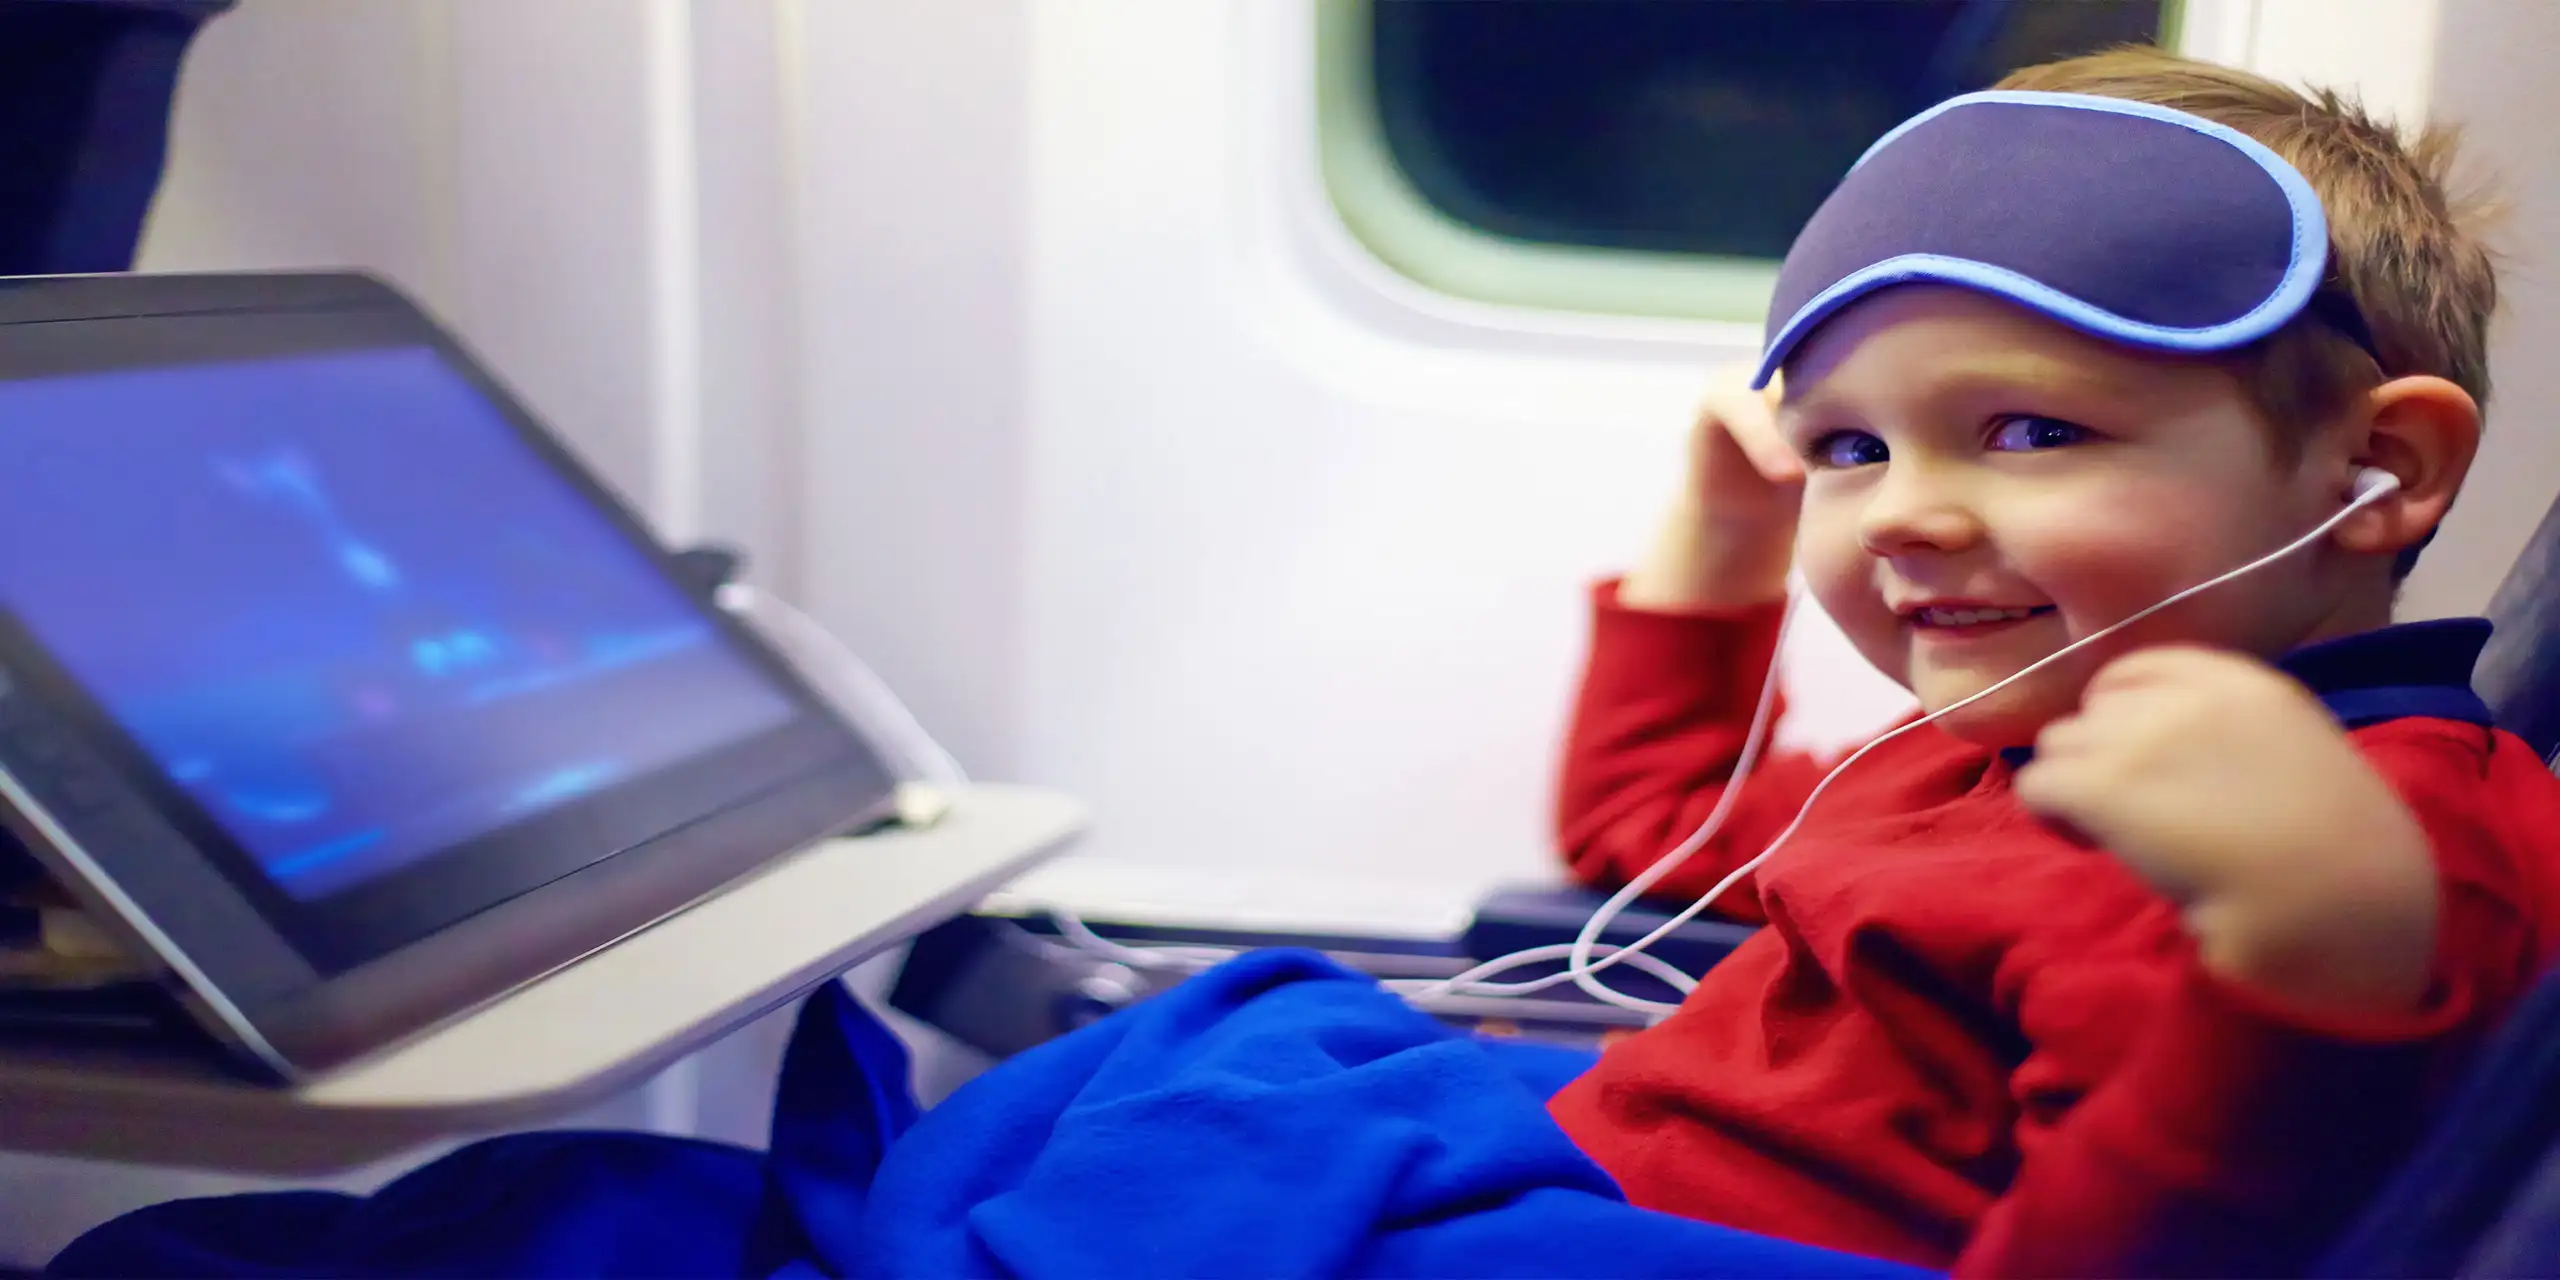 Kid On Plane; Courtesy of Olesia Bilkei/Shutterstock.com